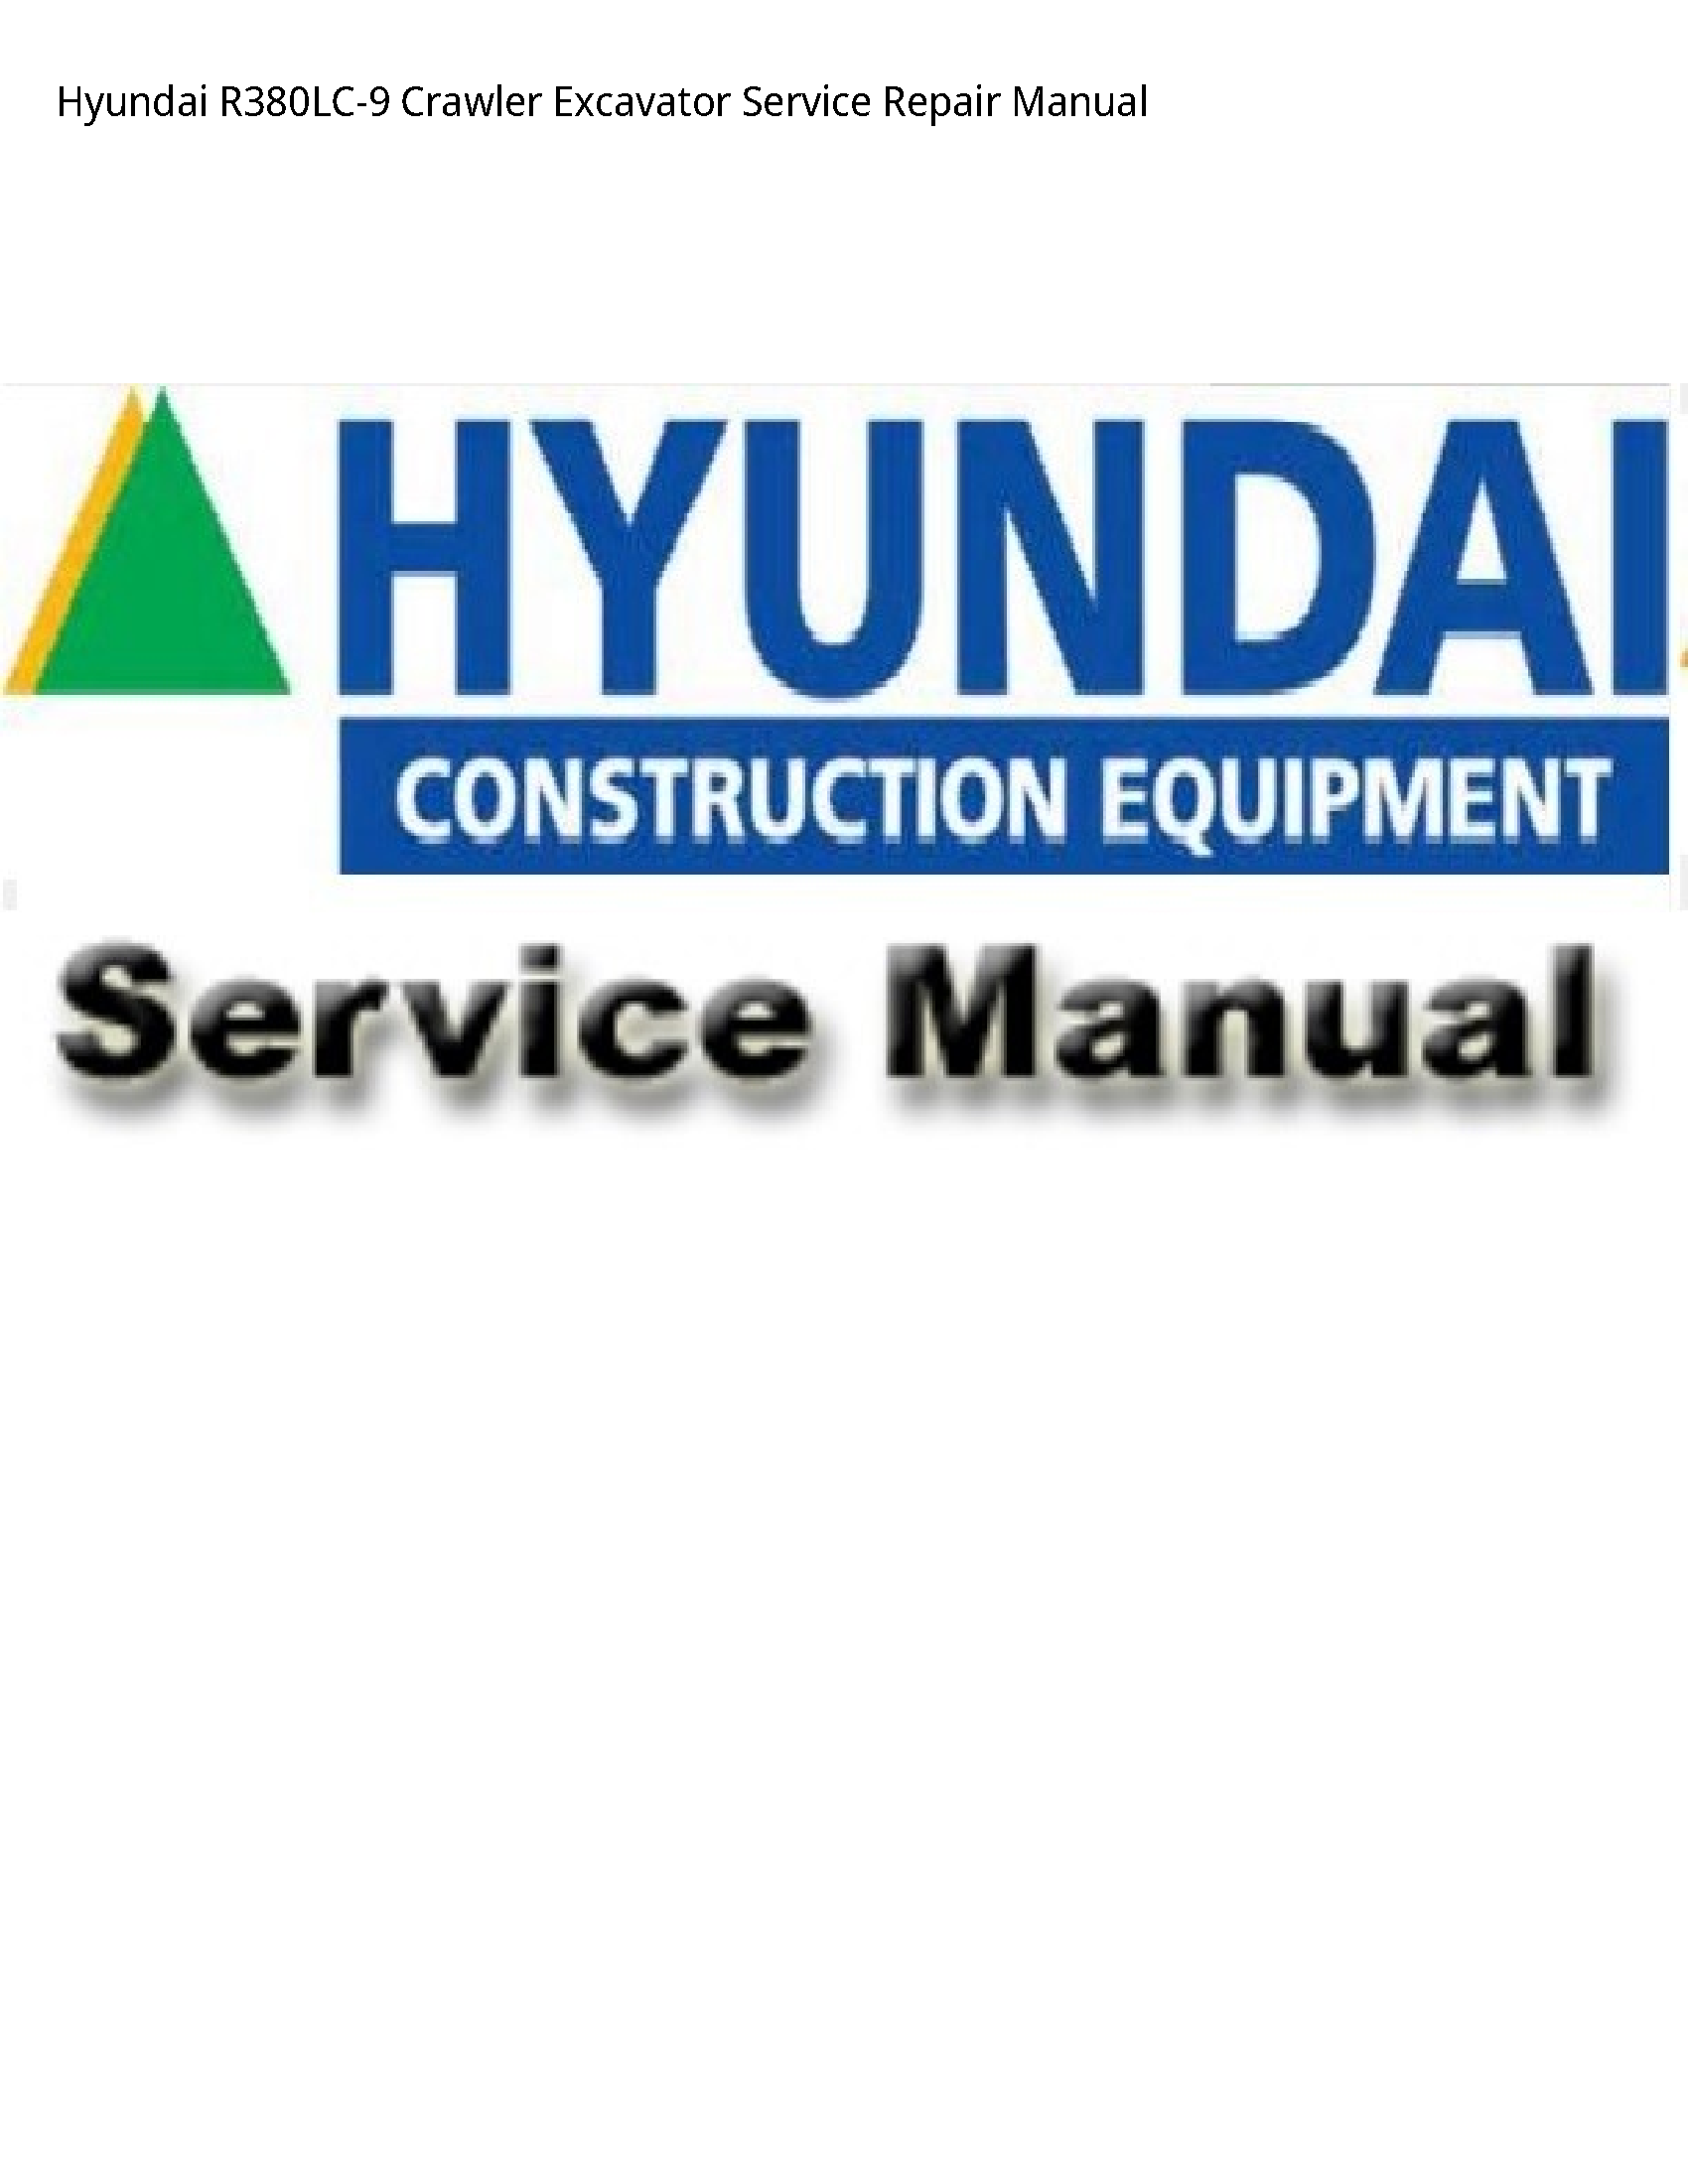 Hyundai R380LC-9 Crawler Excavator manual